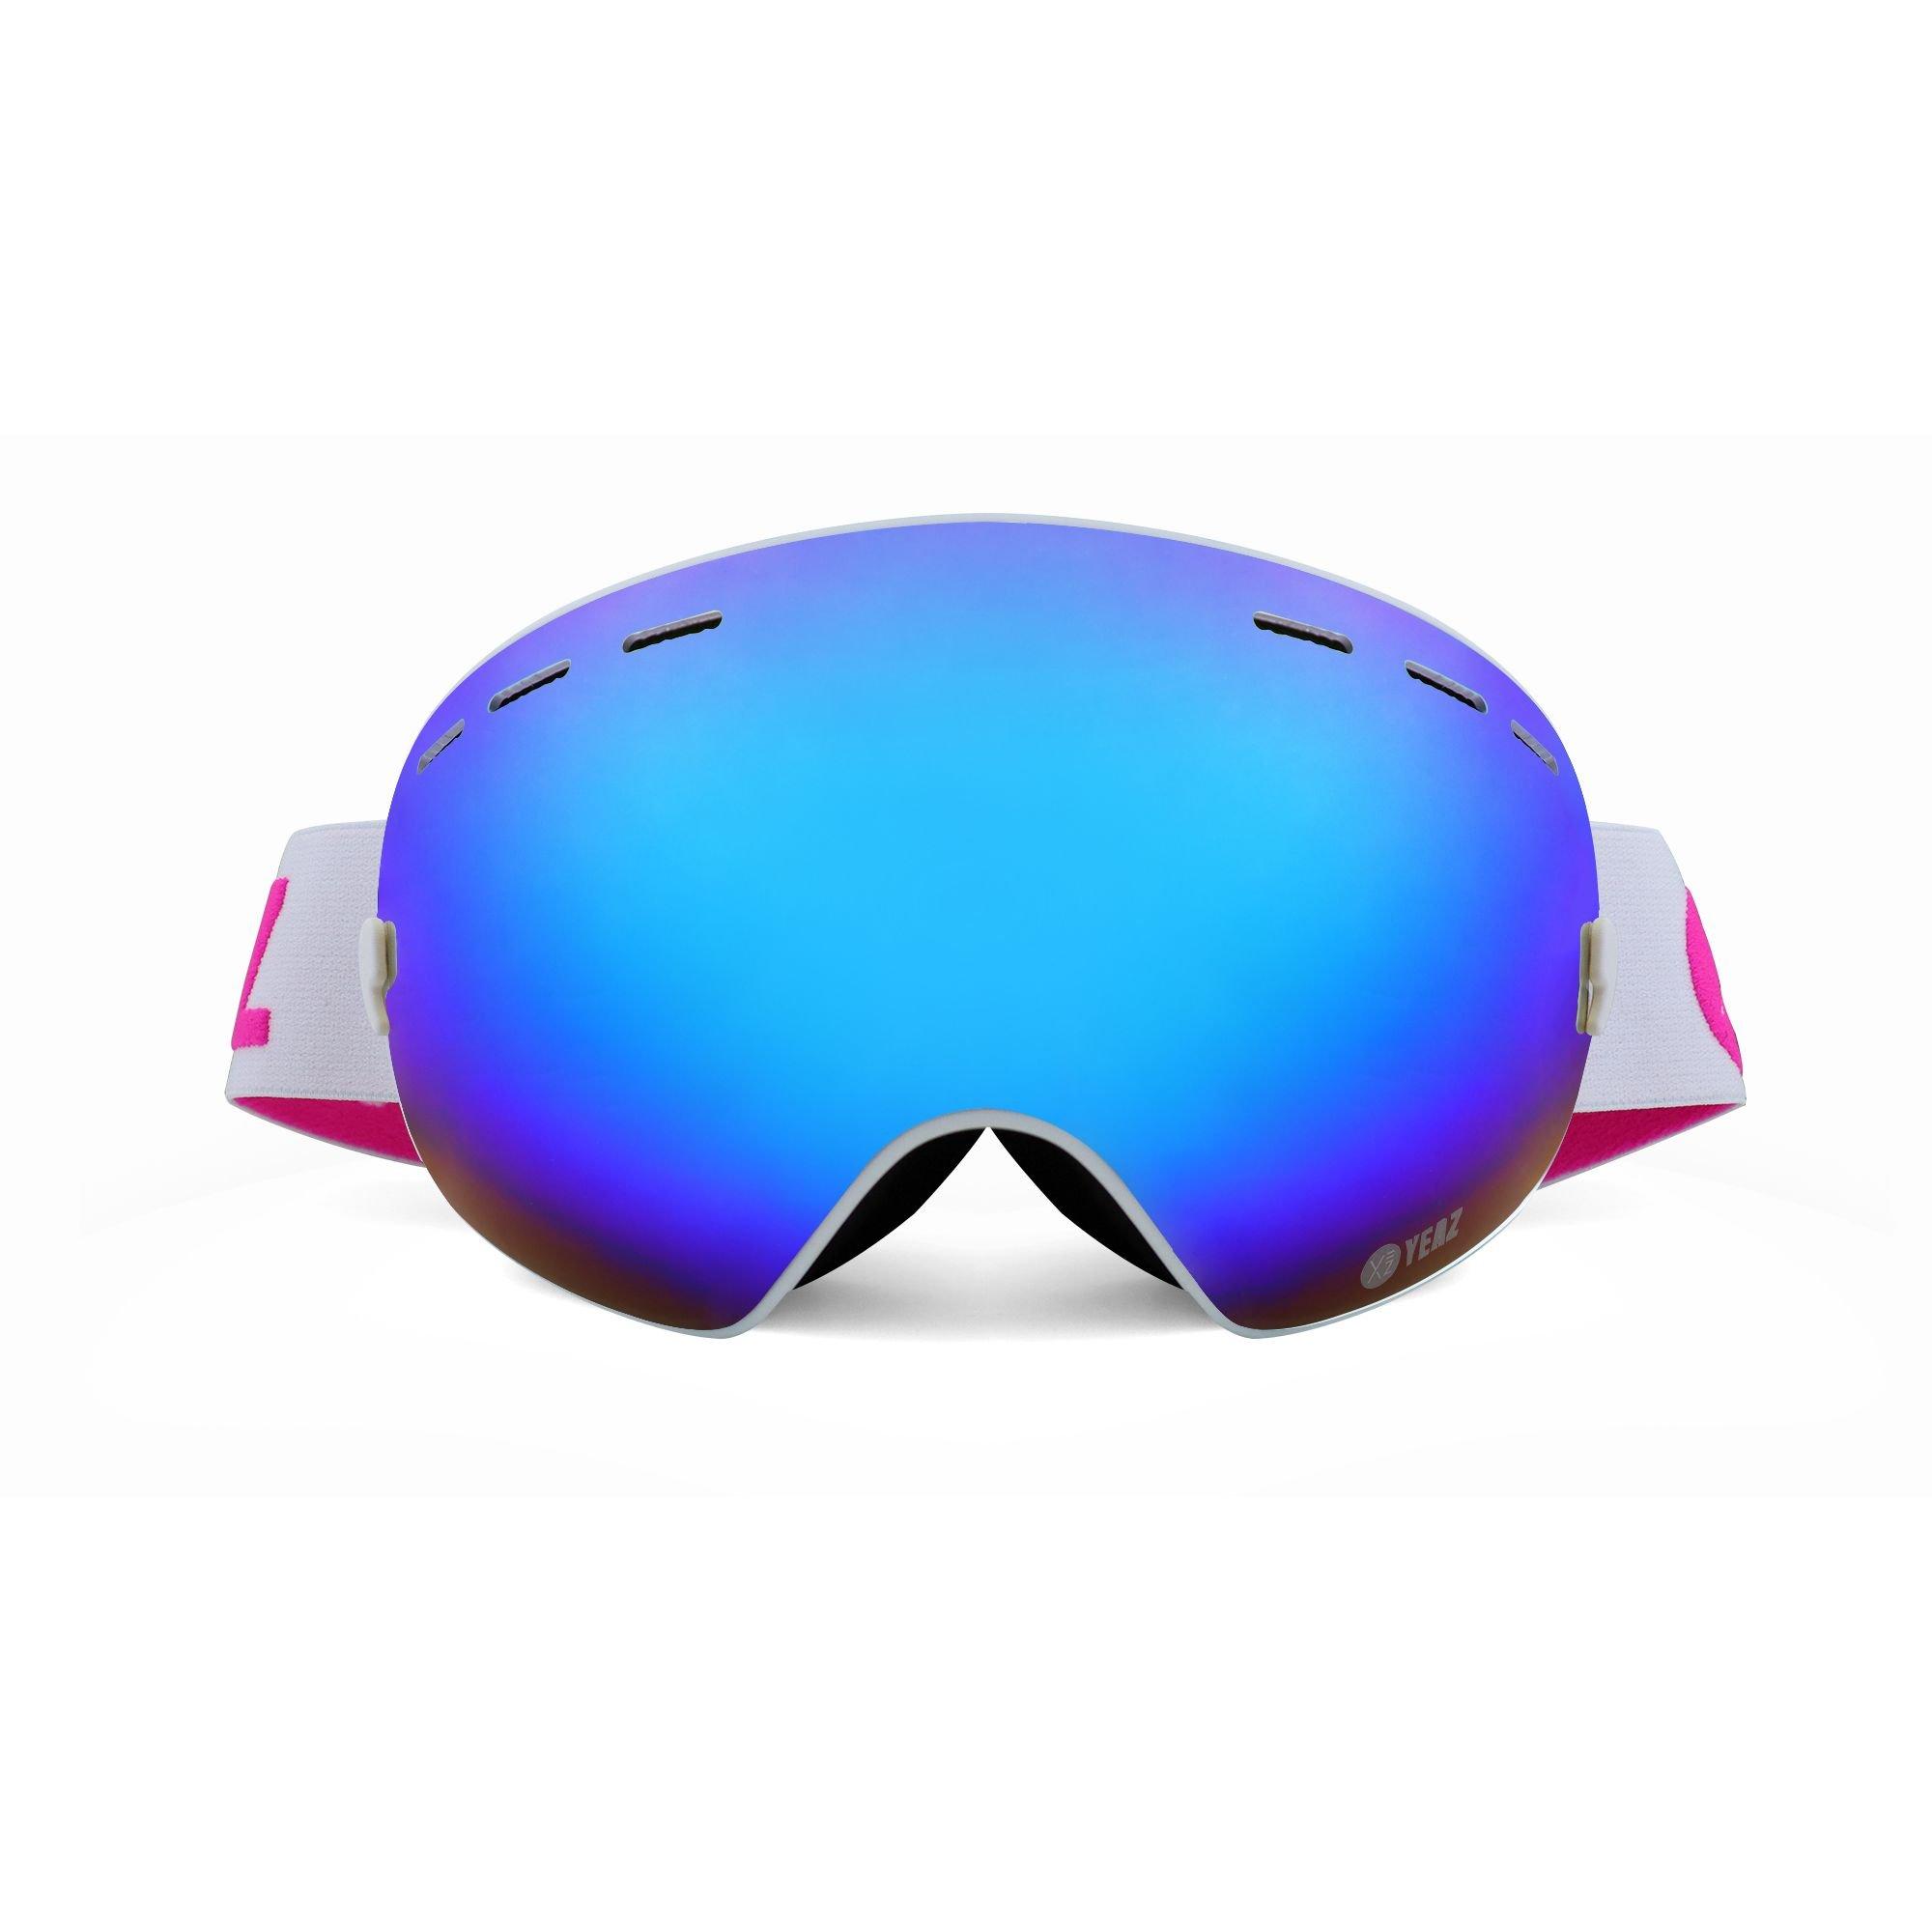 YEAZ  XTRM-SUMMIT Masque de ski / snowboard avec monture bleu/blanc/rose 